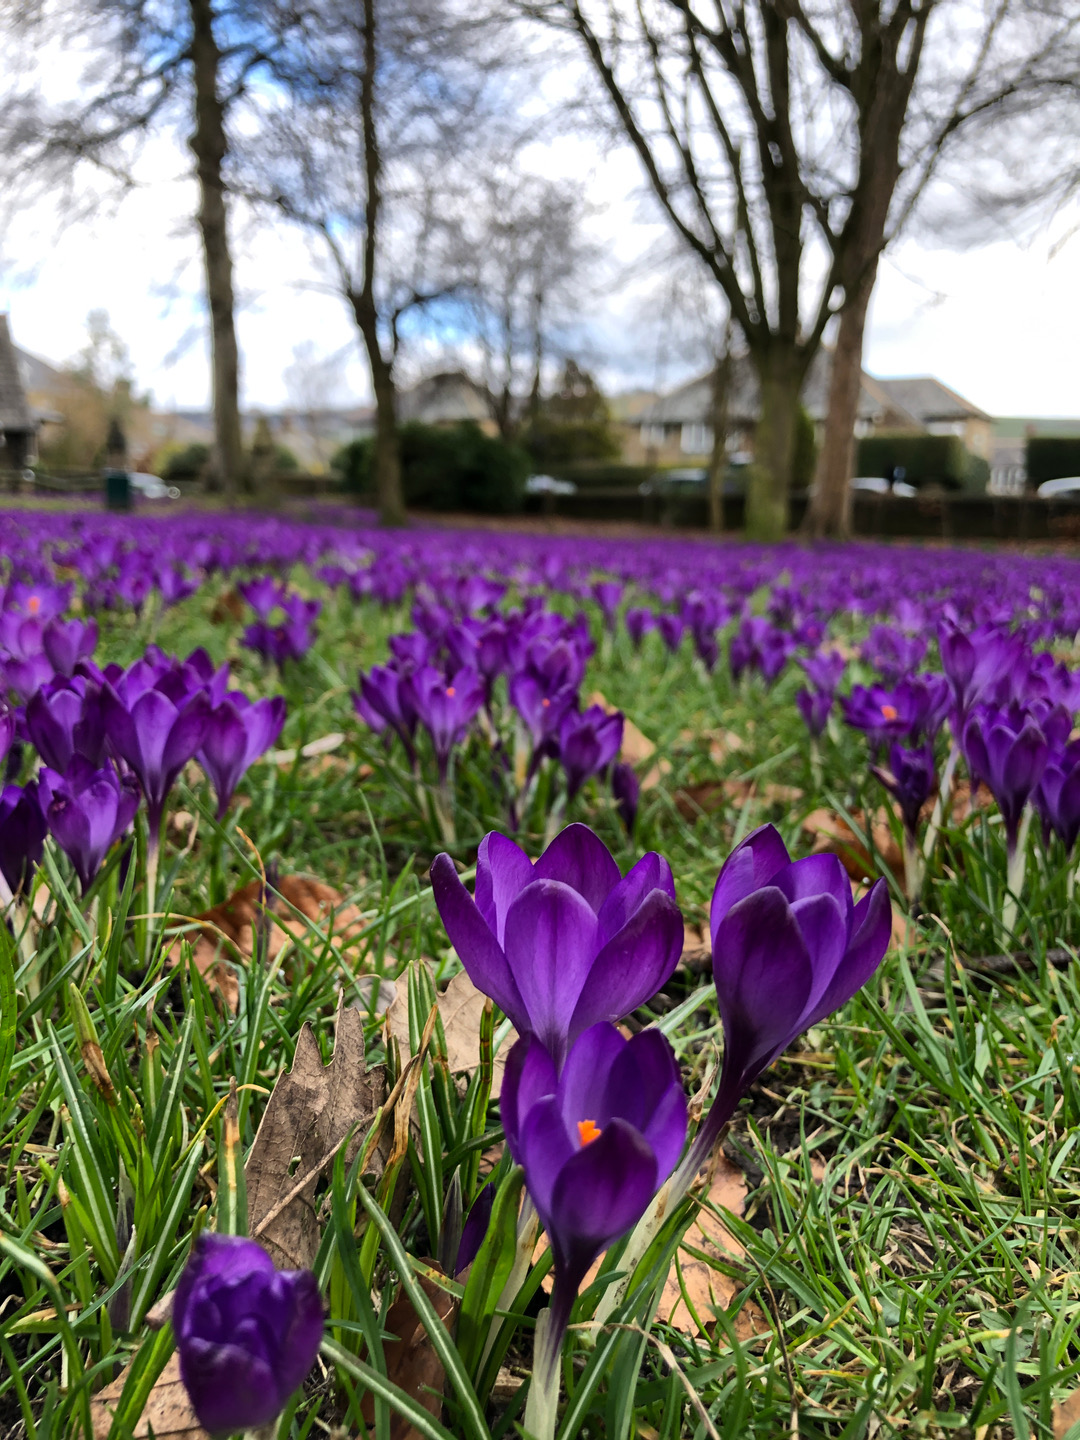 Purple flowers spread across a park